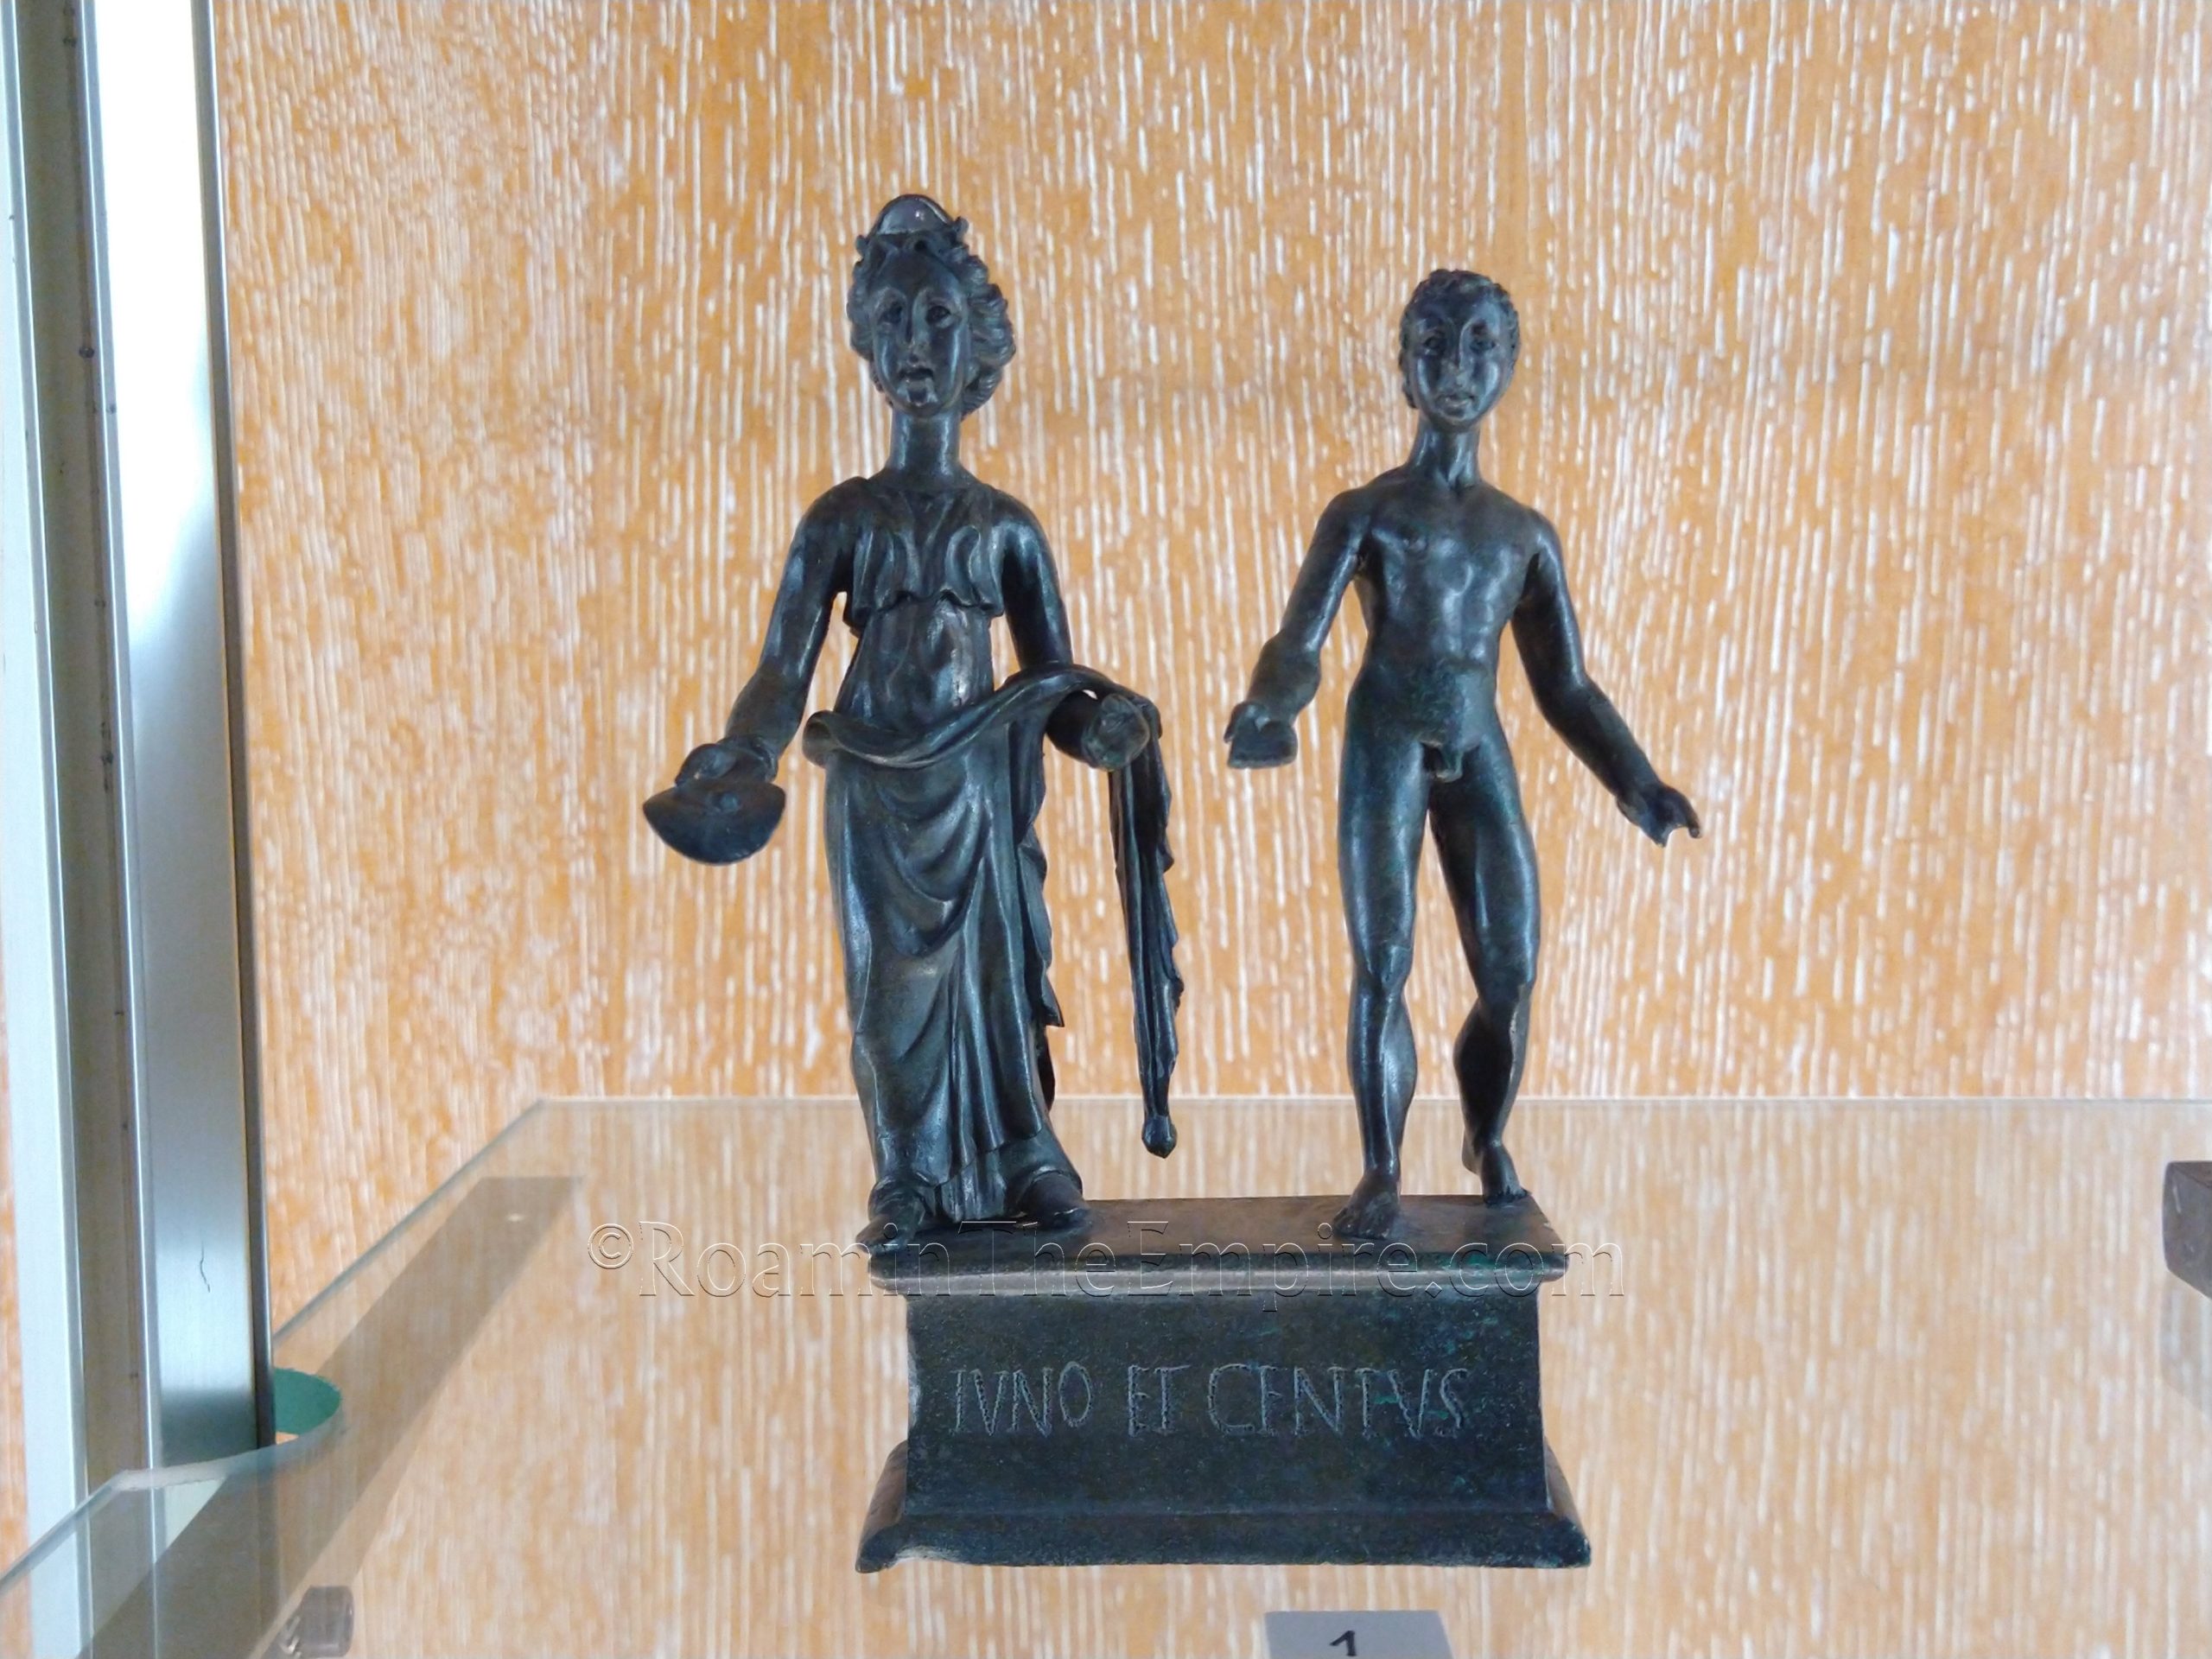 Bronze statuettes depicting Juno and a Genius. Dated to the 2nd century CE. From Mâlain. Musée Archéologique de Dijon.